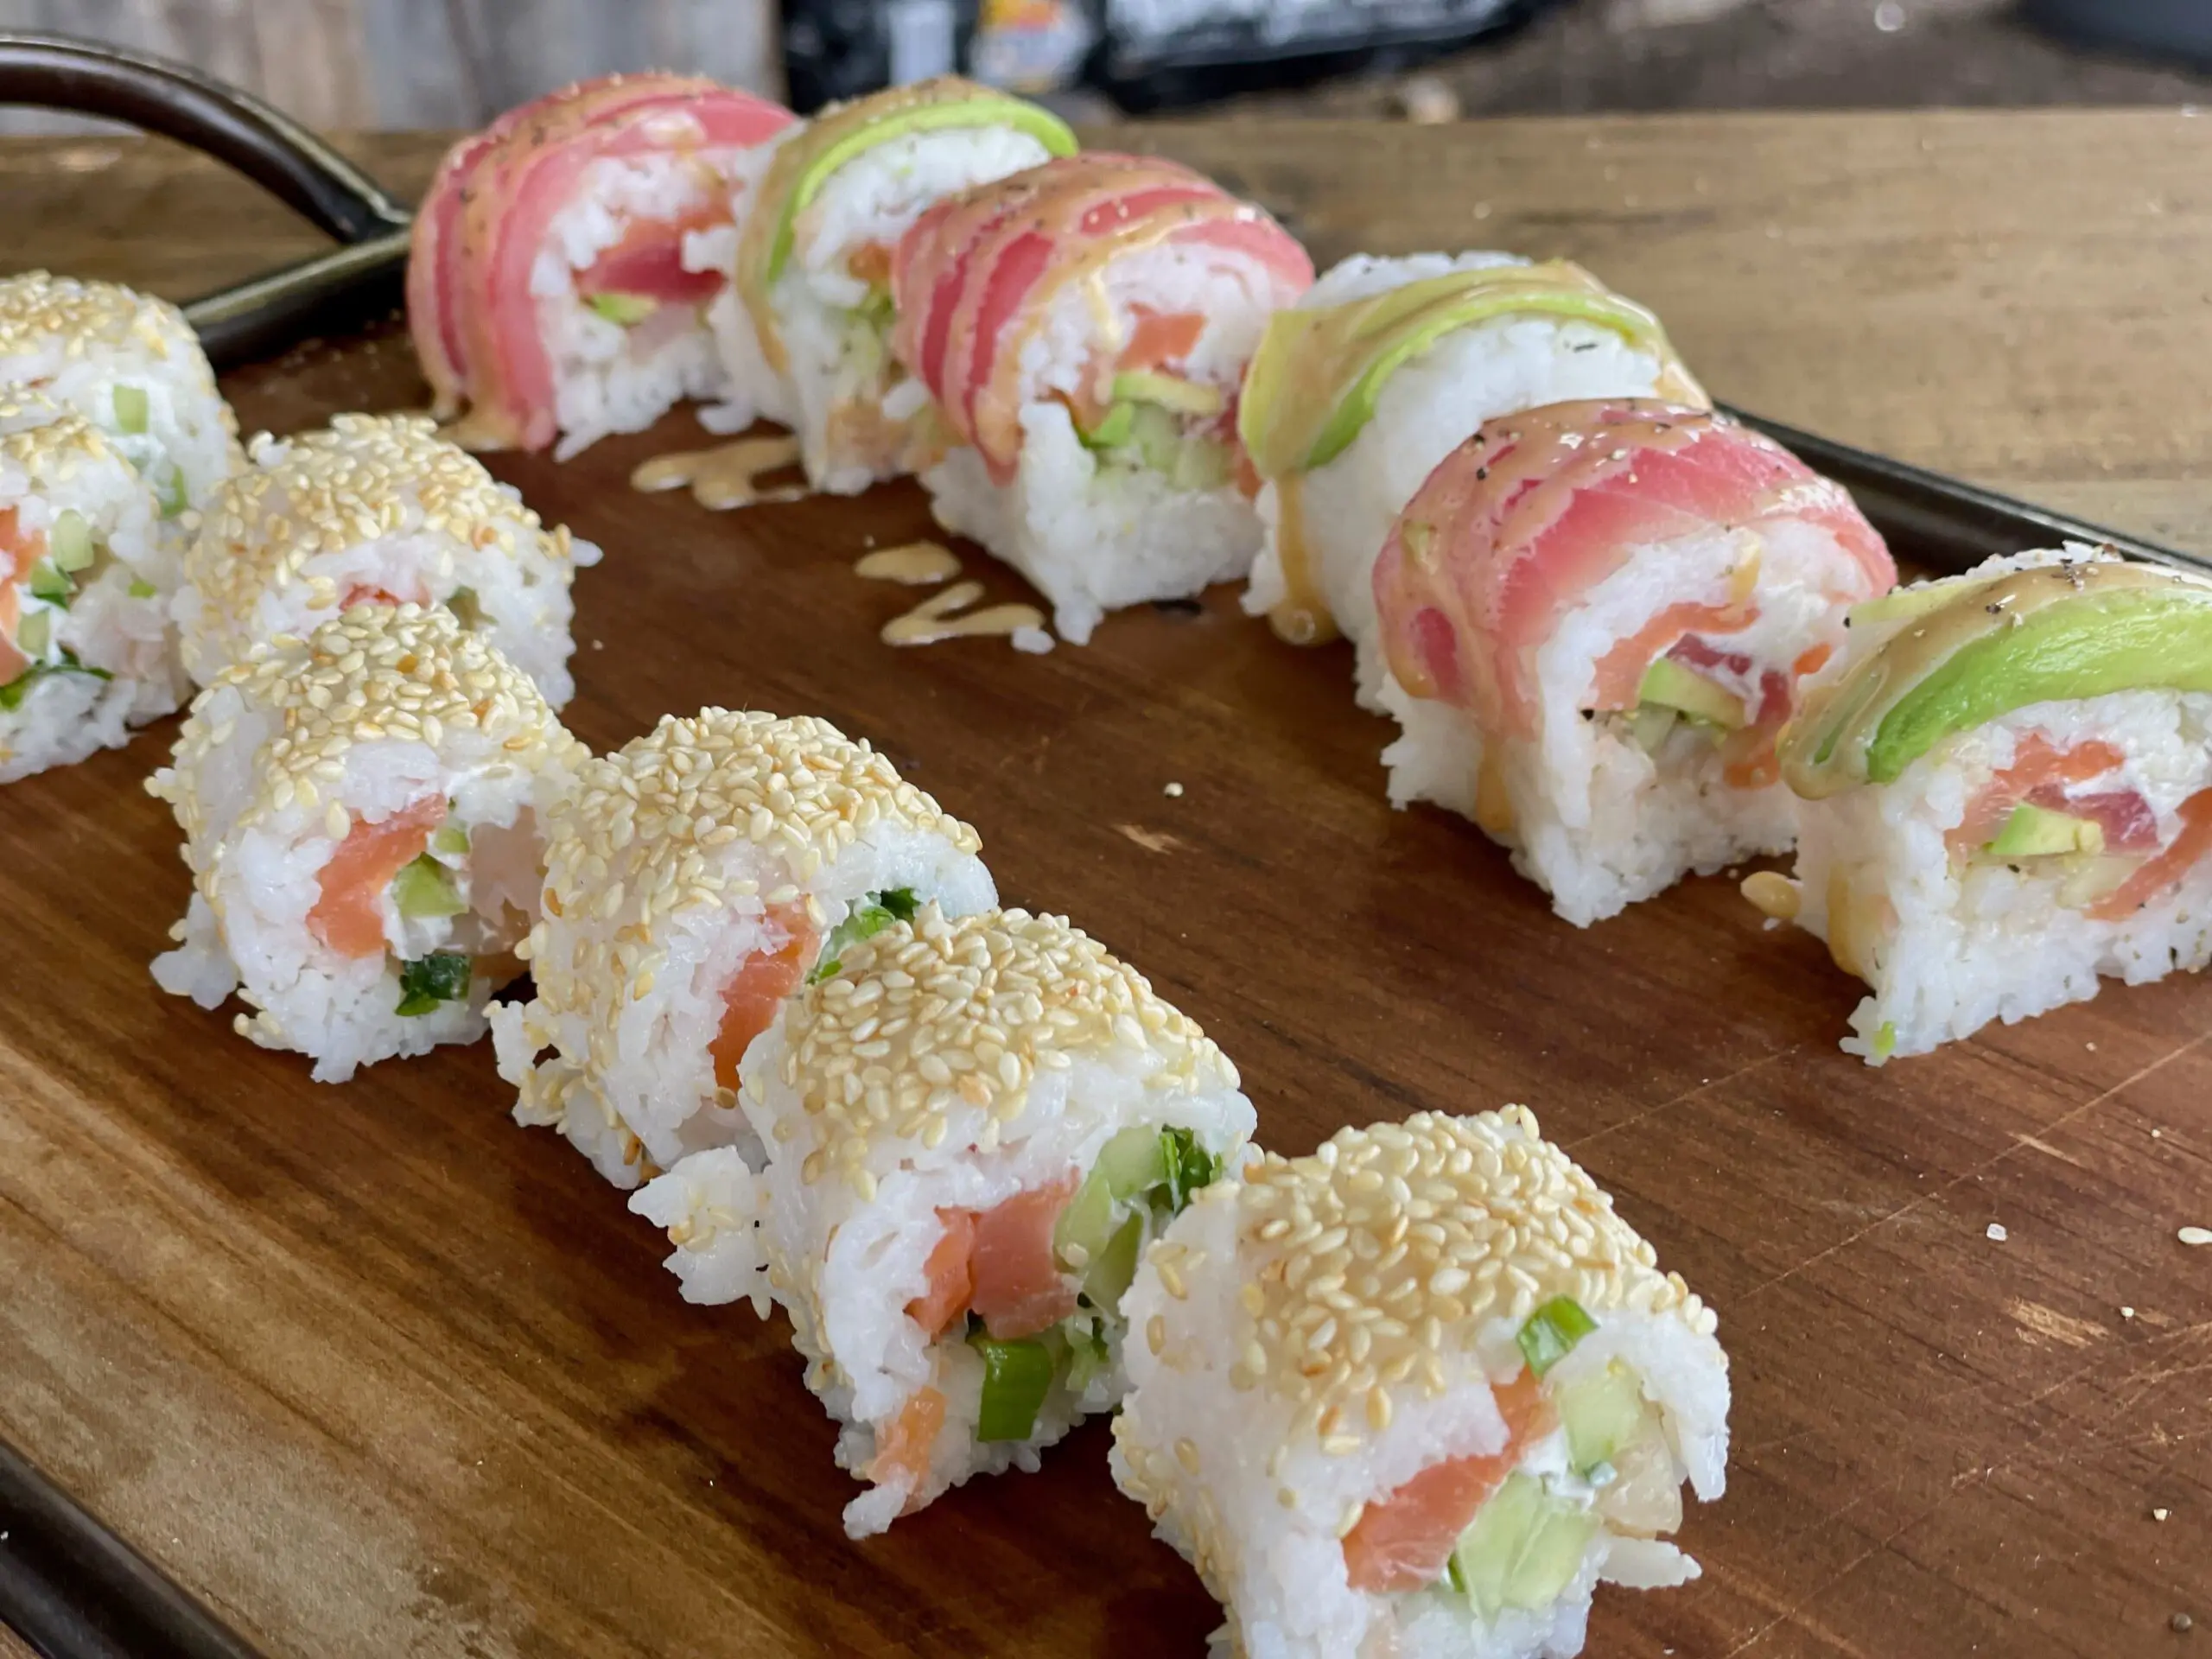 https://kentrollins.com/wp-content/uploads/2022/05/Sushi-featured-scaled.jpeg